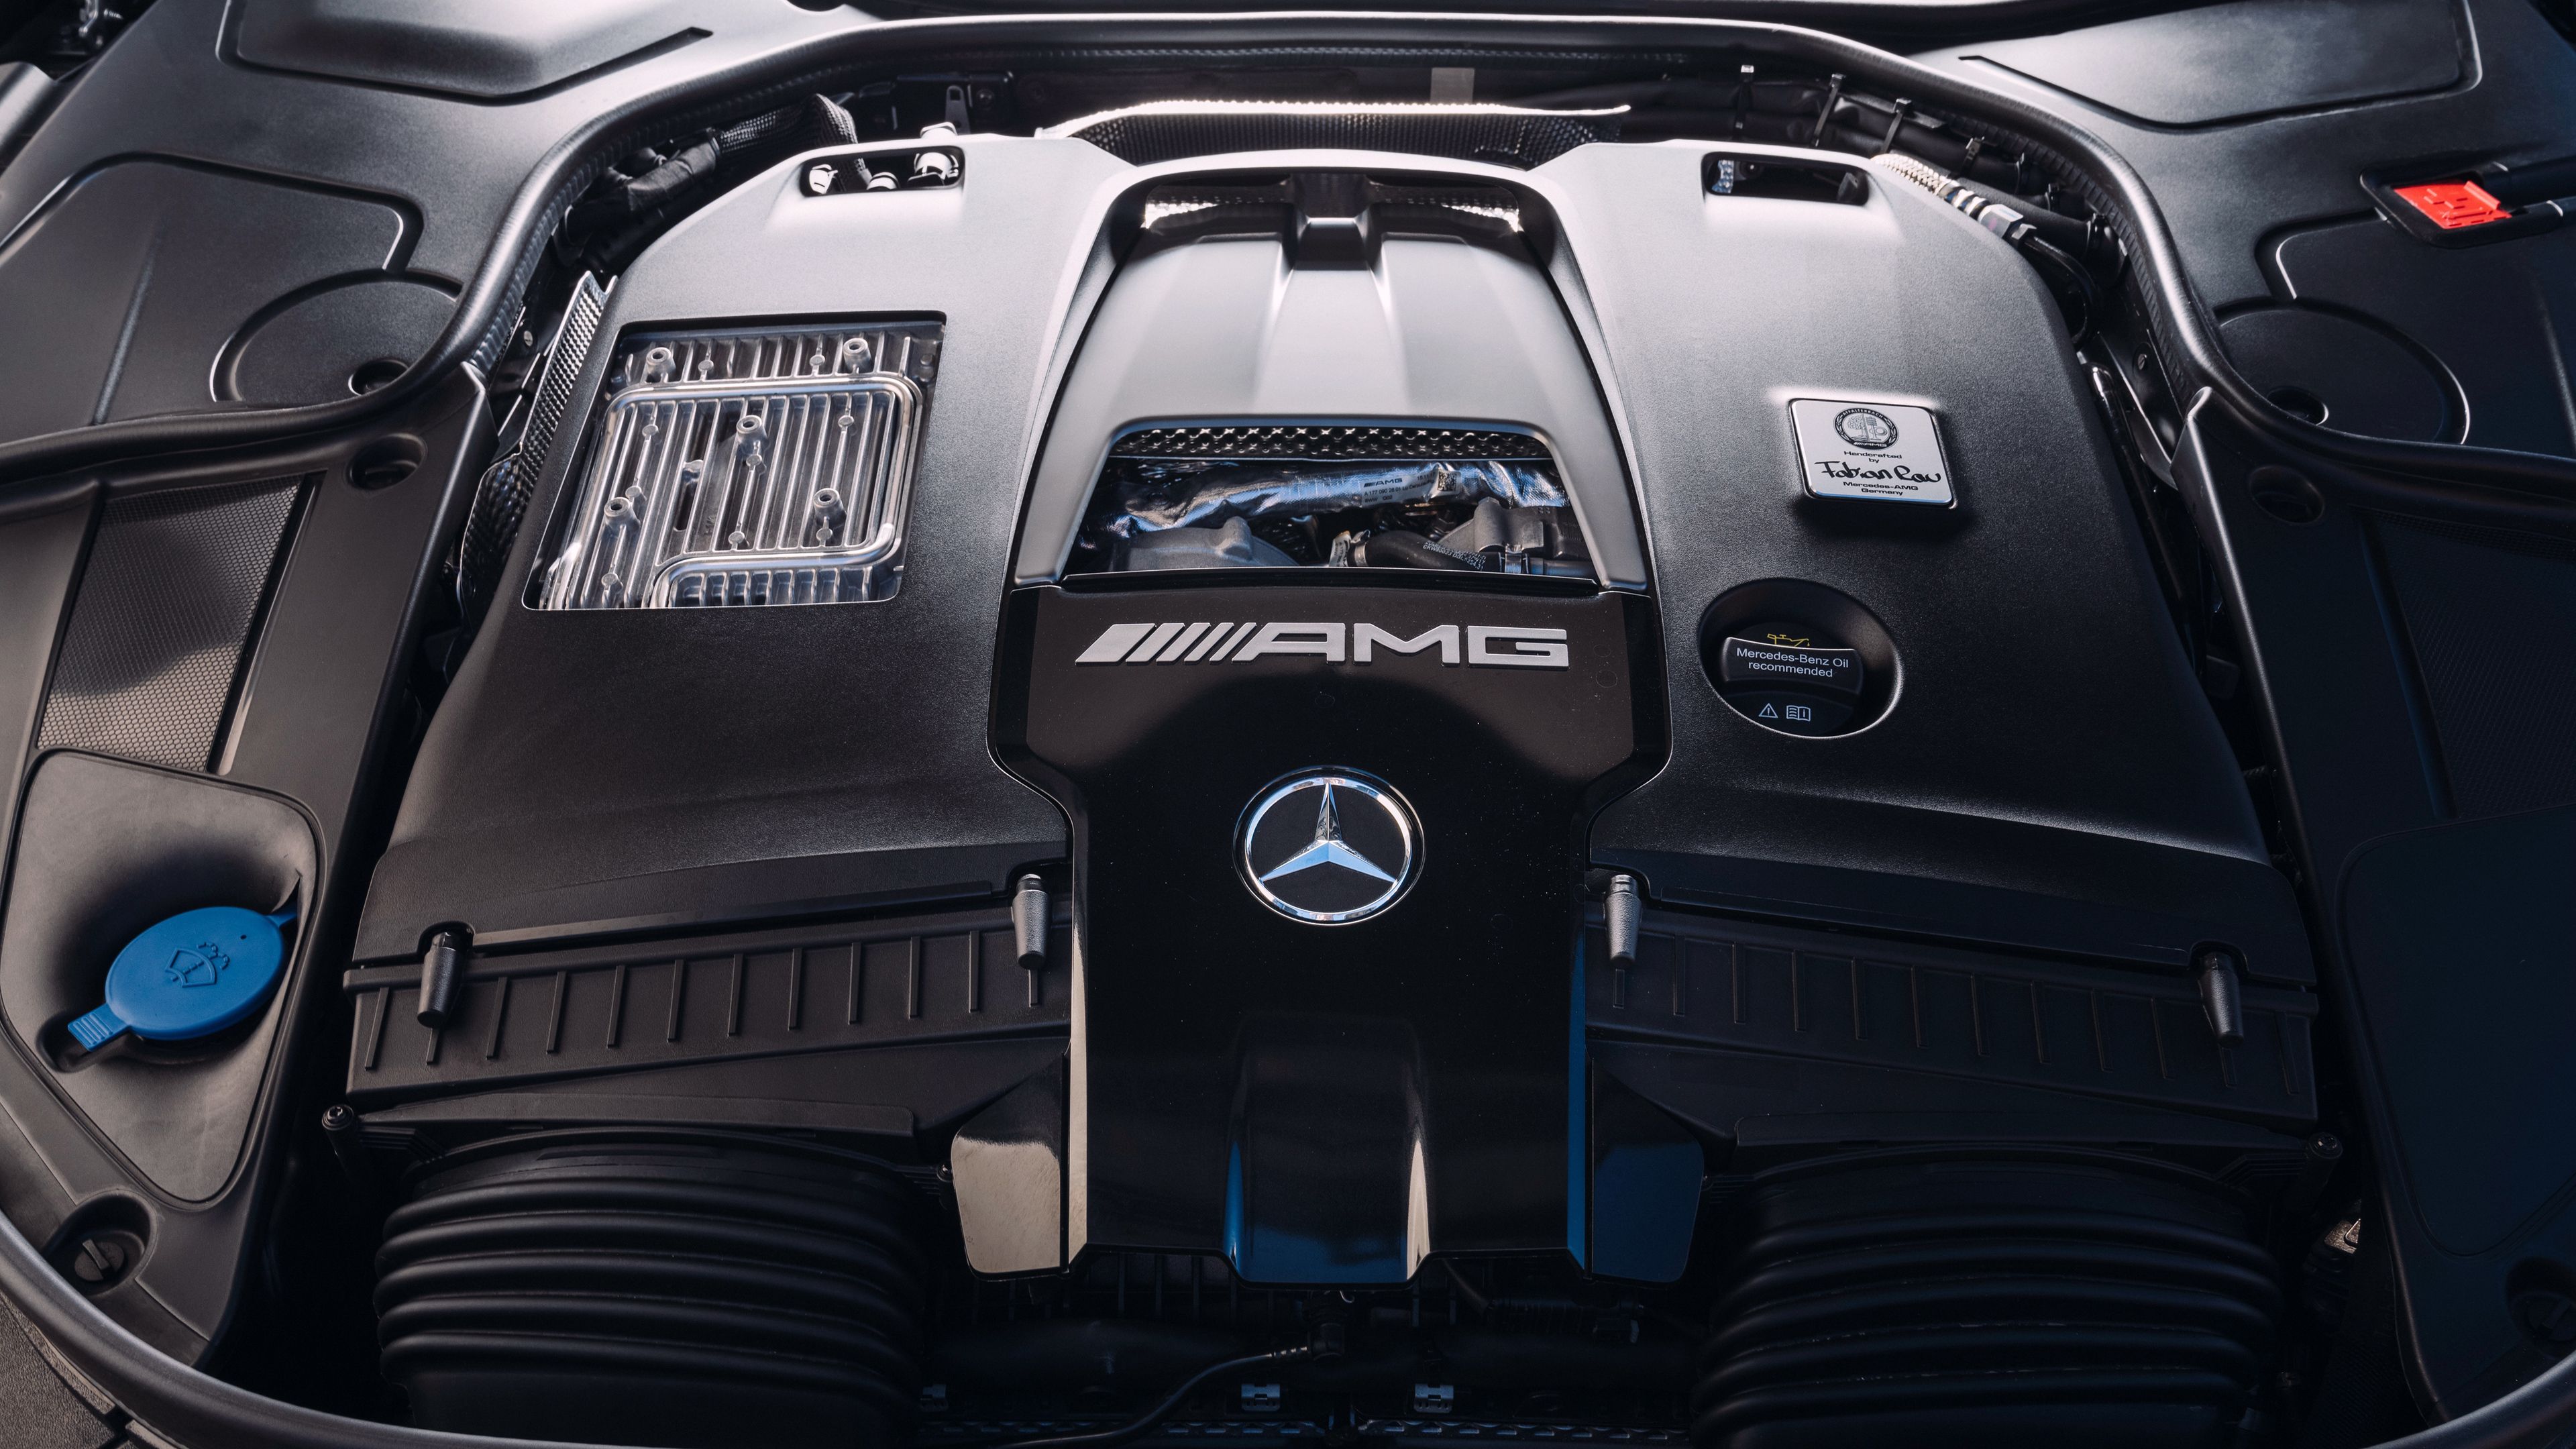 Mercedes AMG S63 2018 Engine View 4k Mercedes Wallpaper, Mercedes S Class Wallpaper, Mercedes Benz Wallpaper, Hd Wa. Mercedes Wallpaper, Mercedes Amg, Mercedes